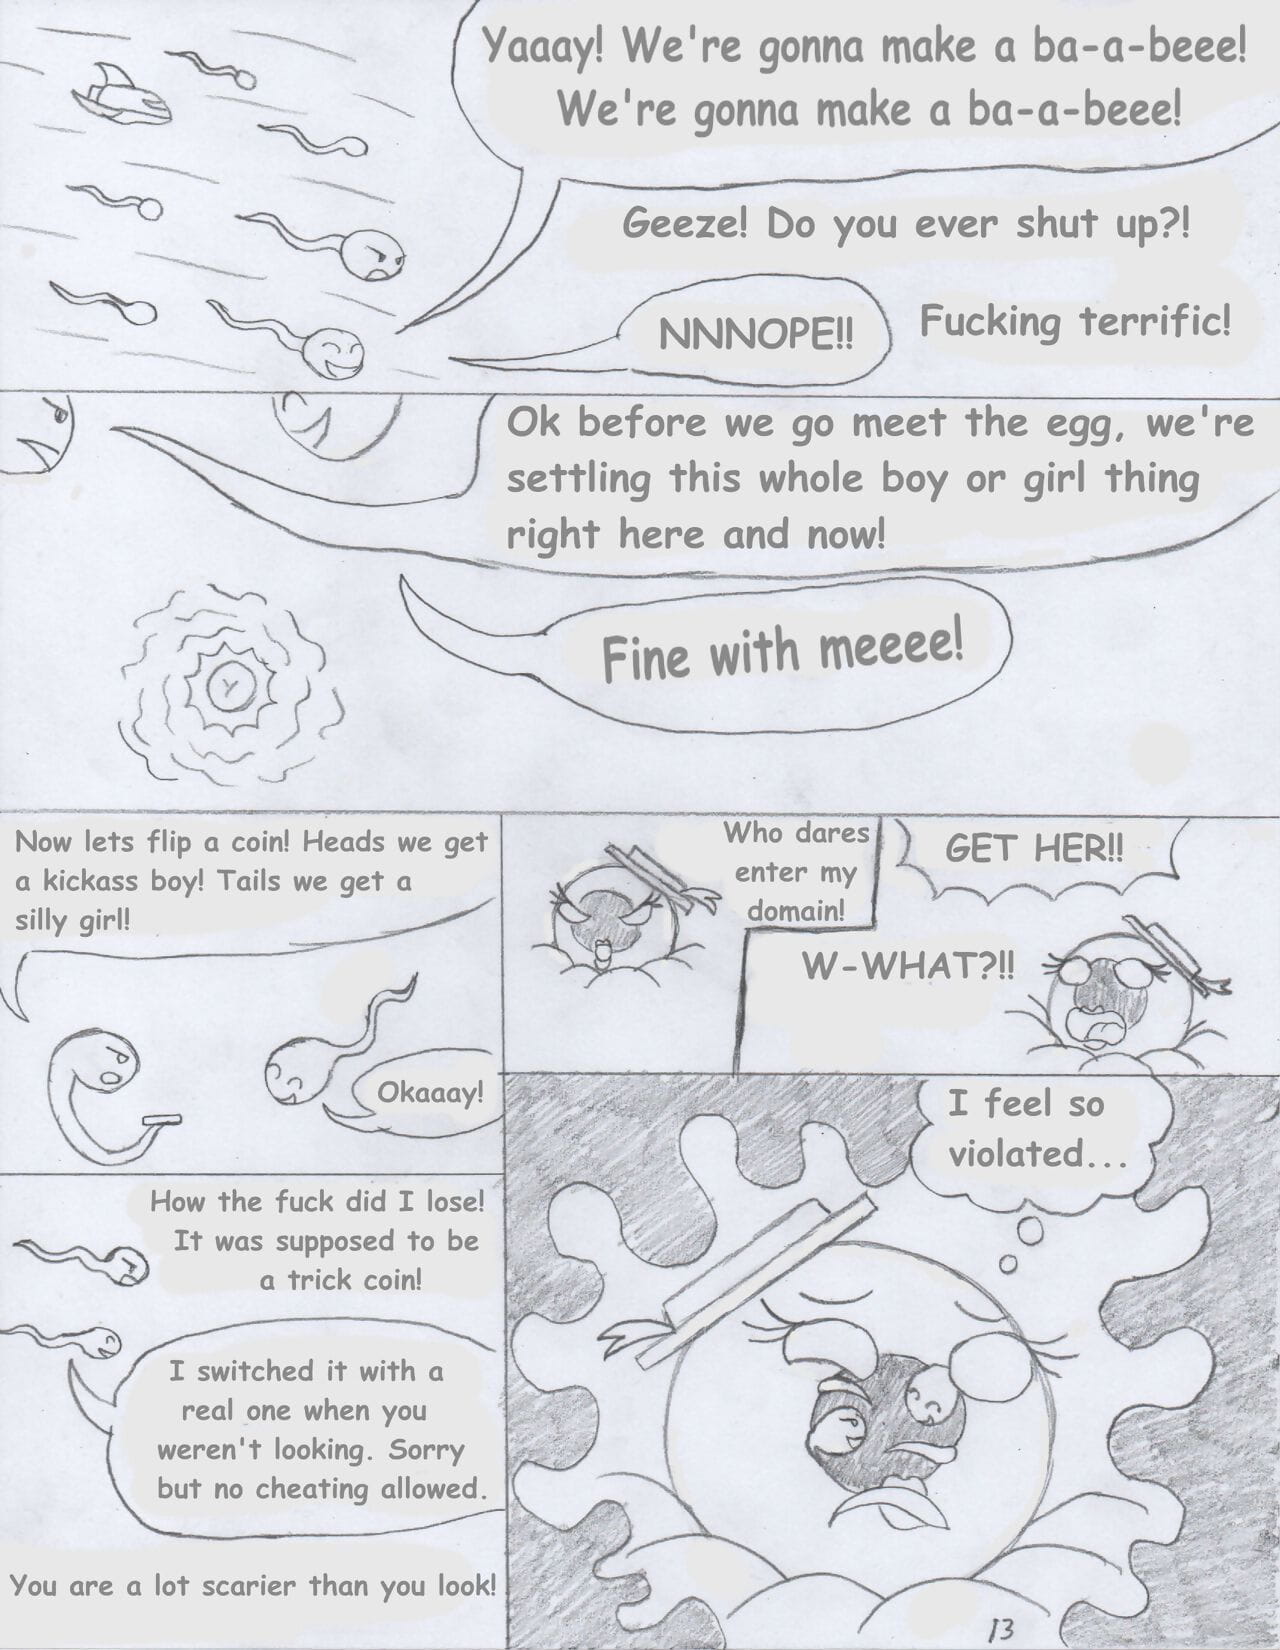 foxtide888 croquis comics galería 2 Parte 3 page 1